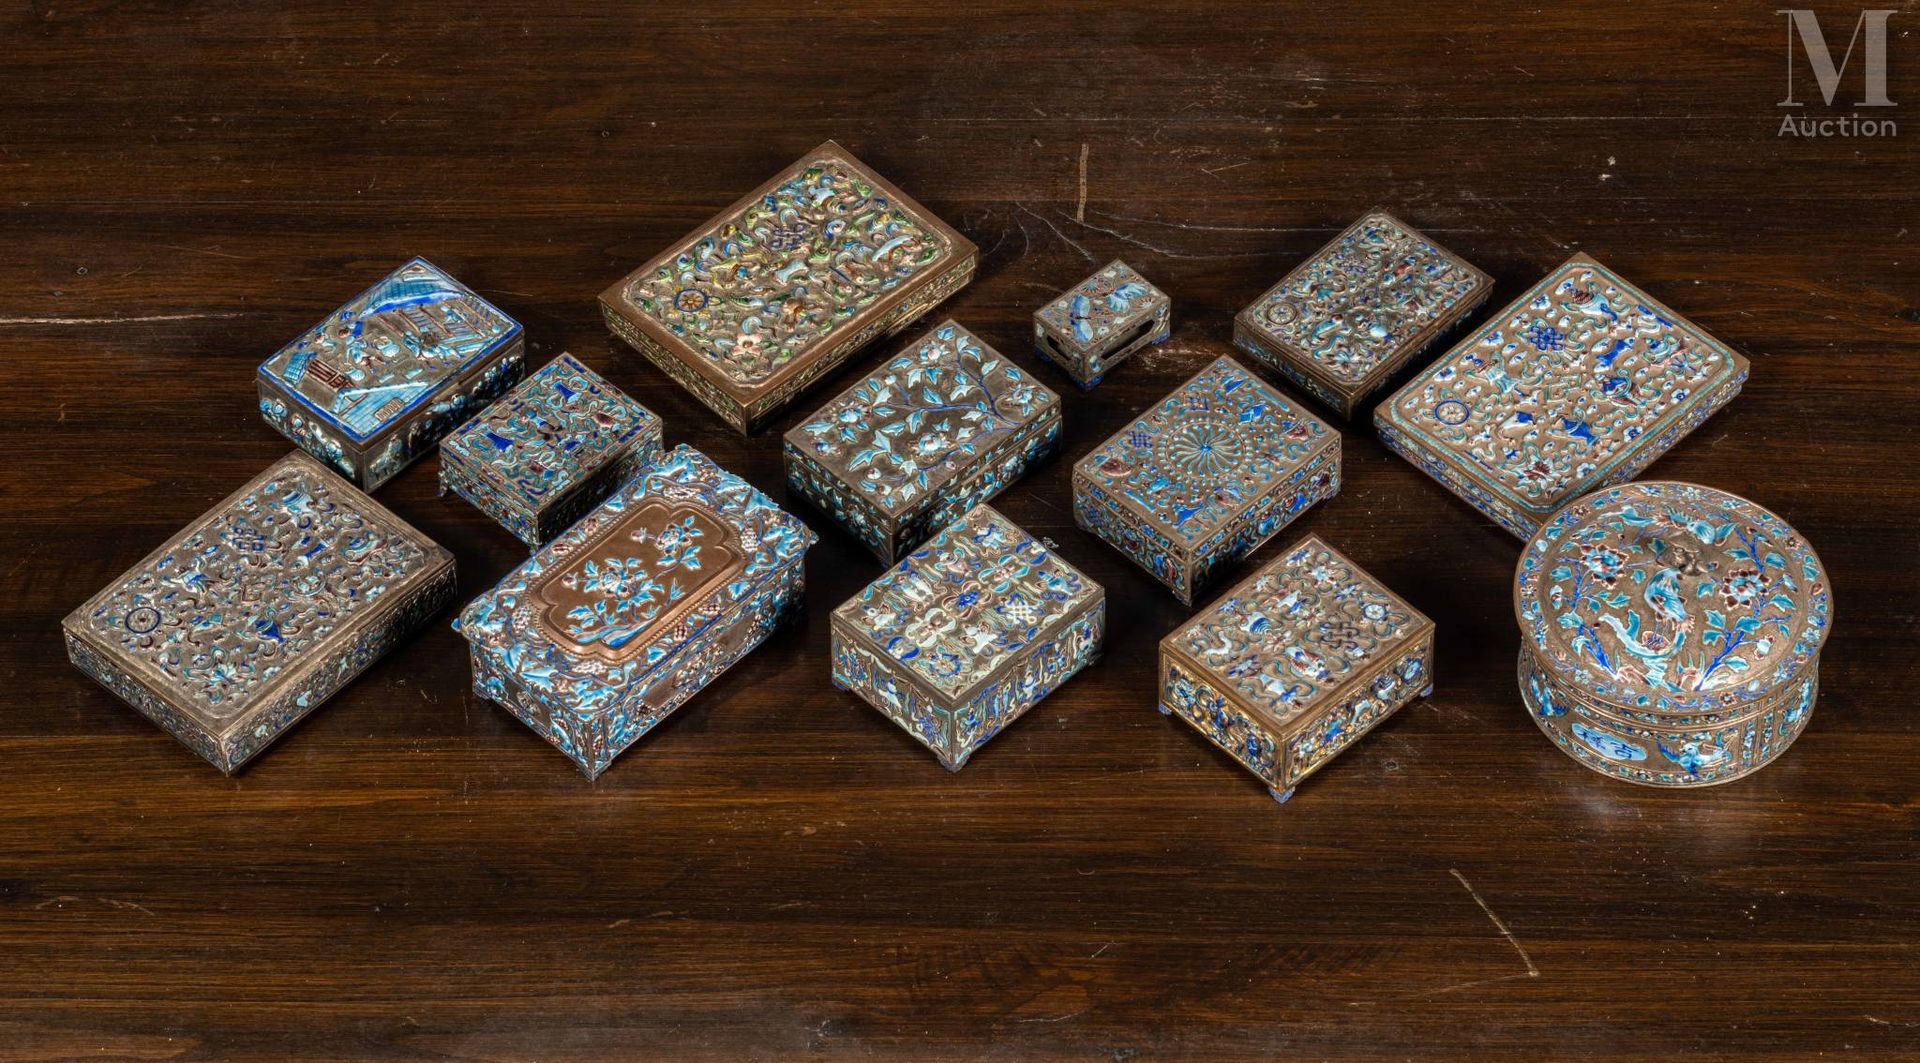 CHINE, Ecole de Canton, XIX siècle 一套13个搪瓷金属盒，12个长方形，1个圆形，装饰有蓝色浮雕的昆虫、花朵和动物。

在7.&hellip;